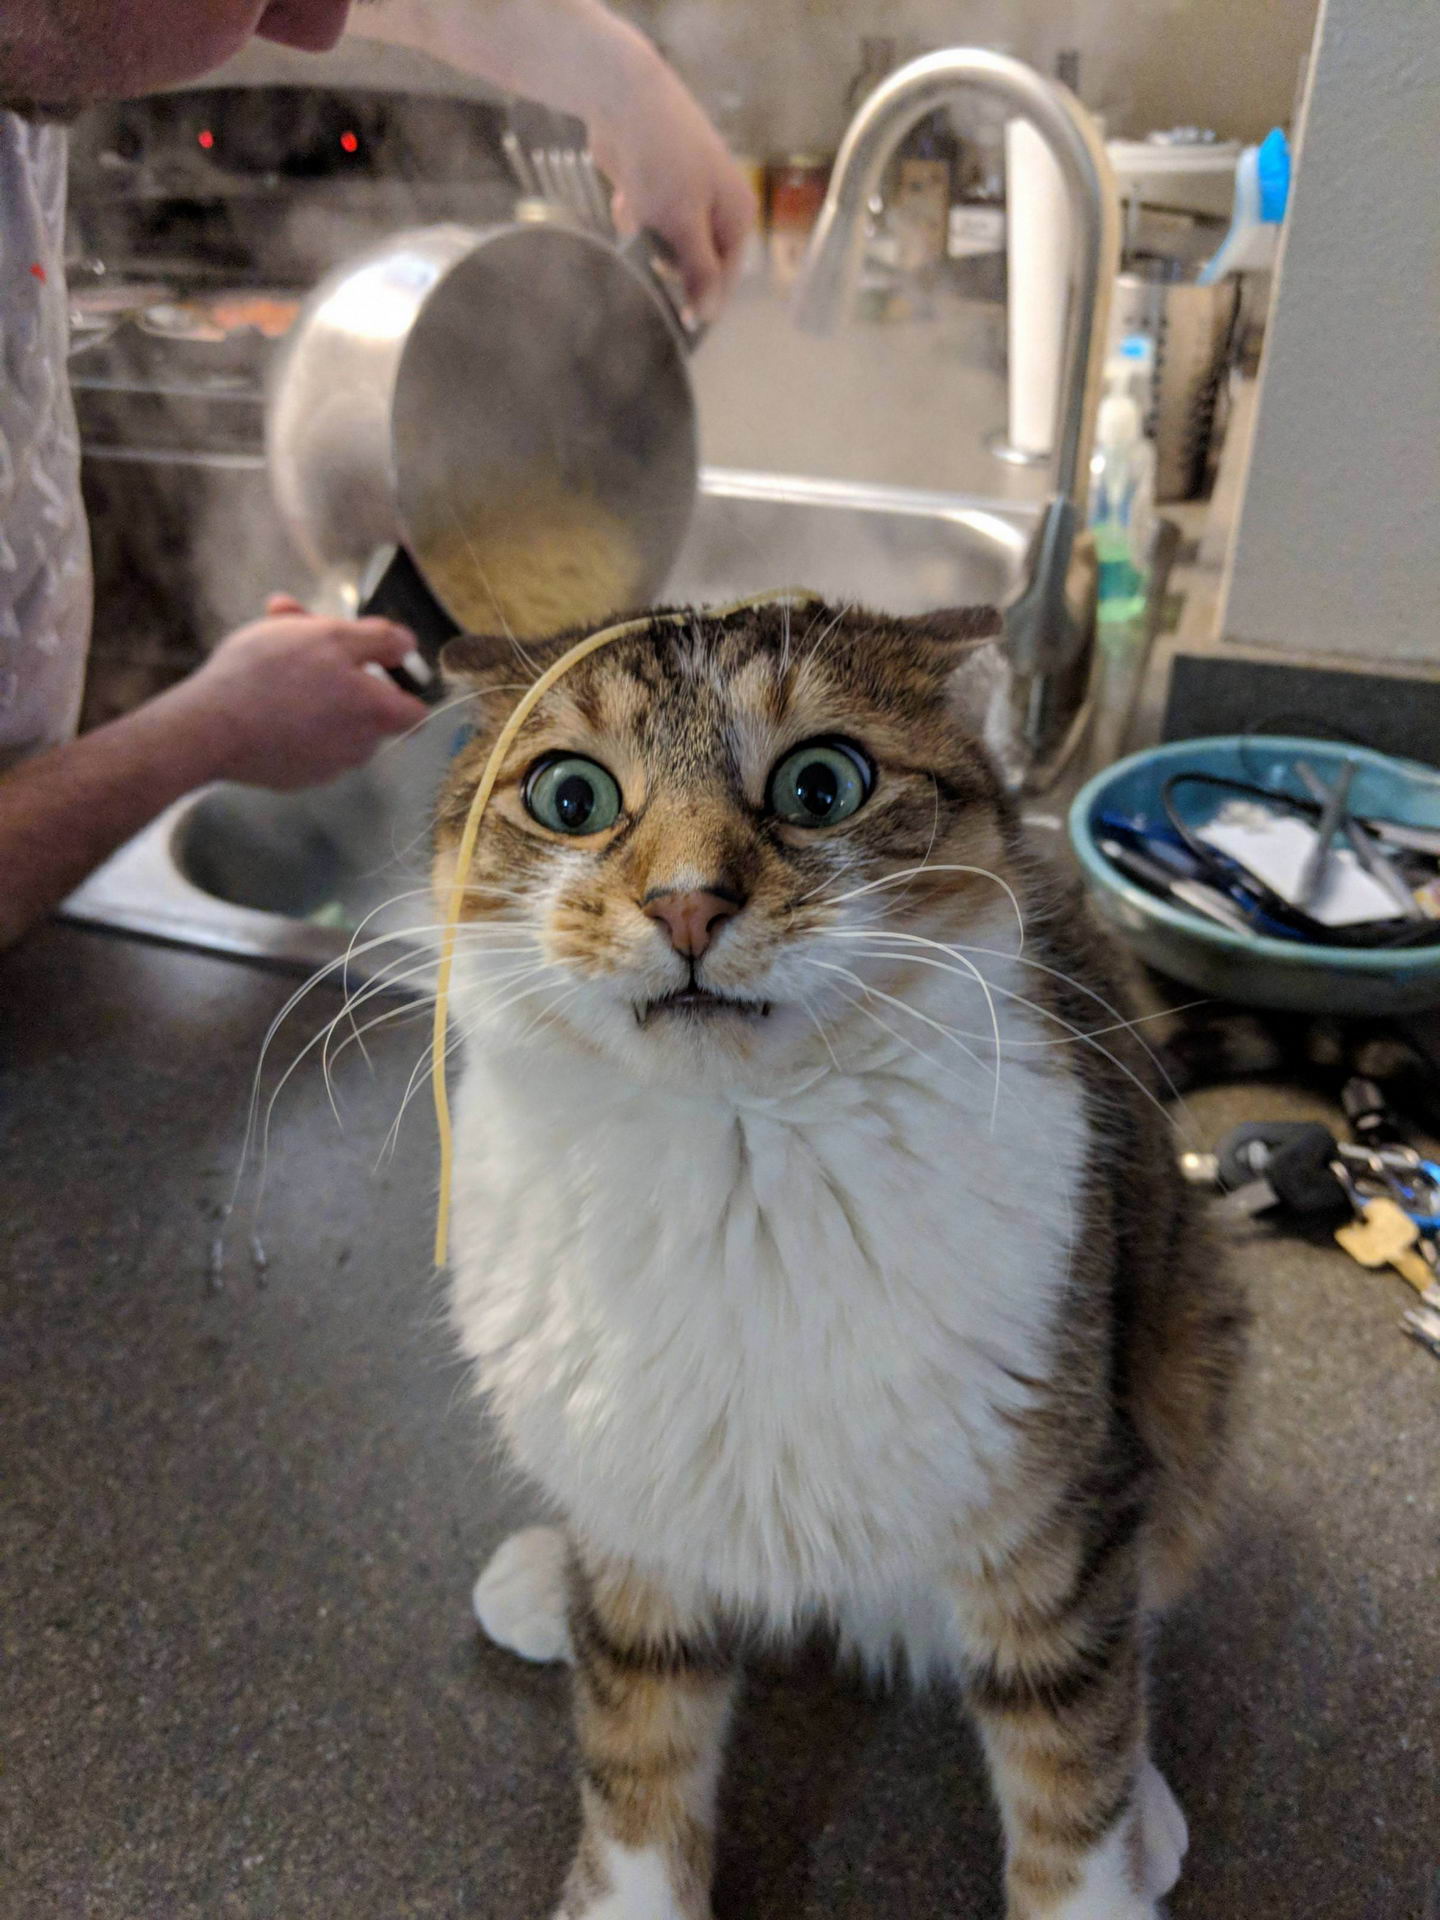 random pics - cat with spaghetti on head